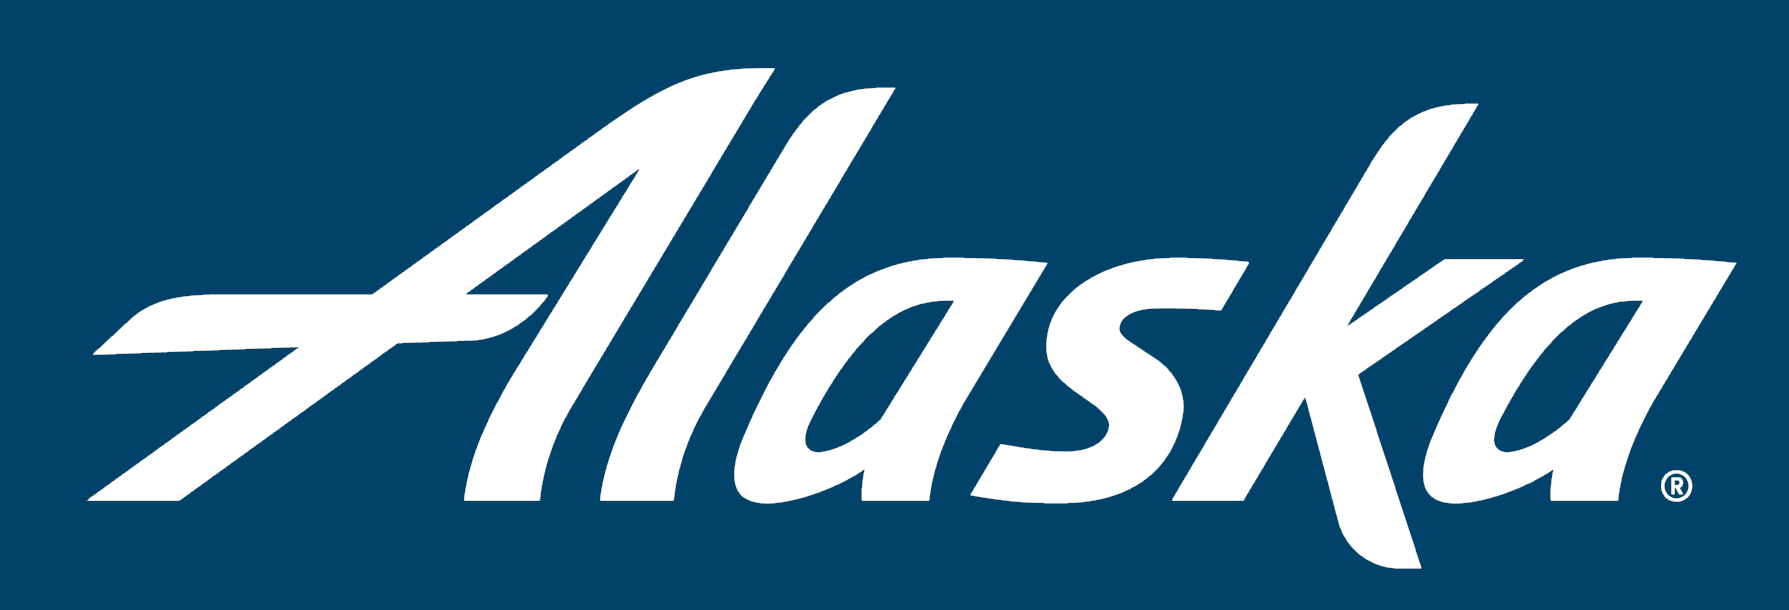 Alaska Airlines Logo - Alaska Airlines – Logos Download